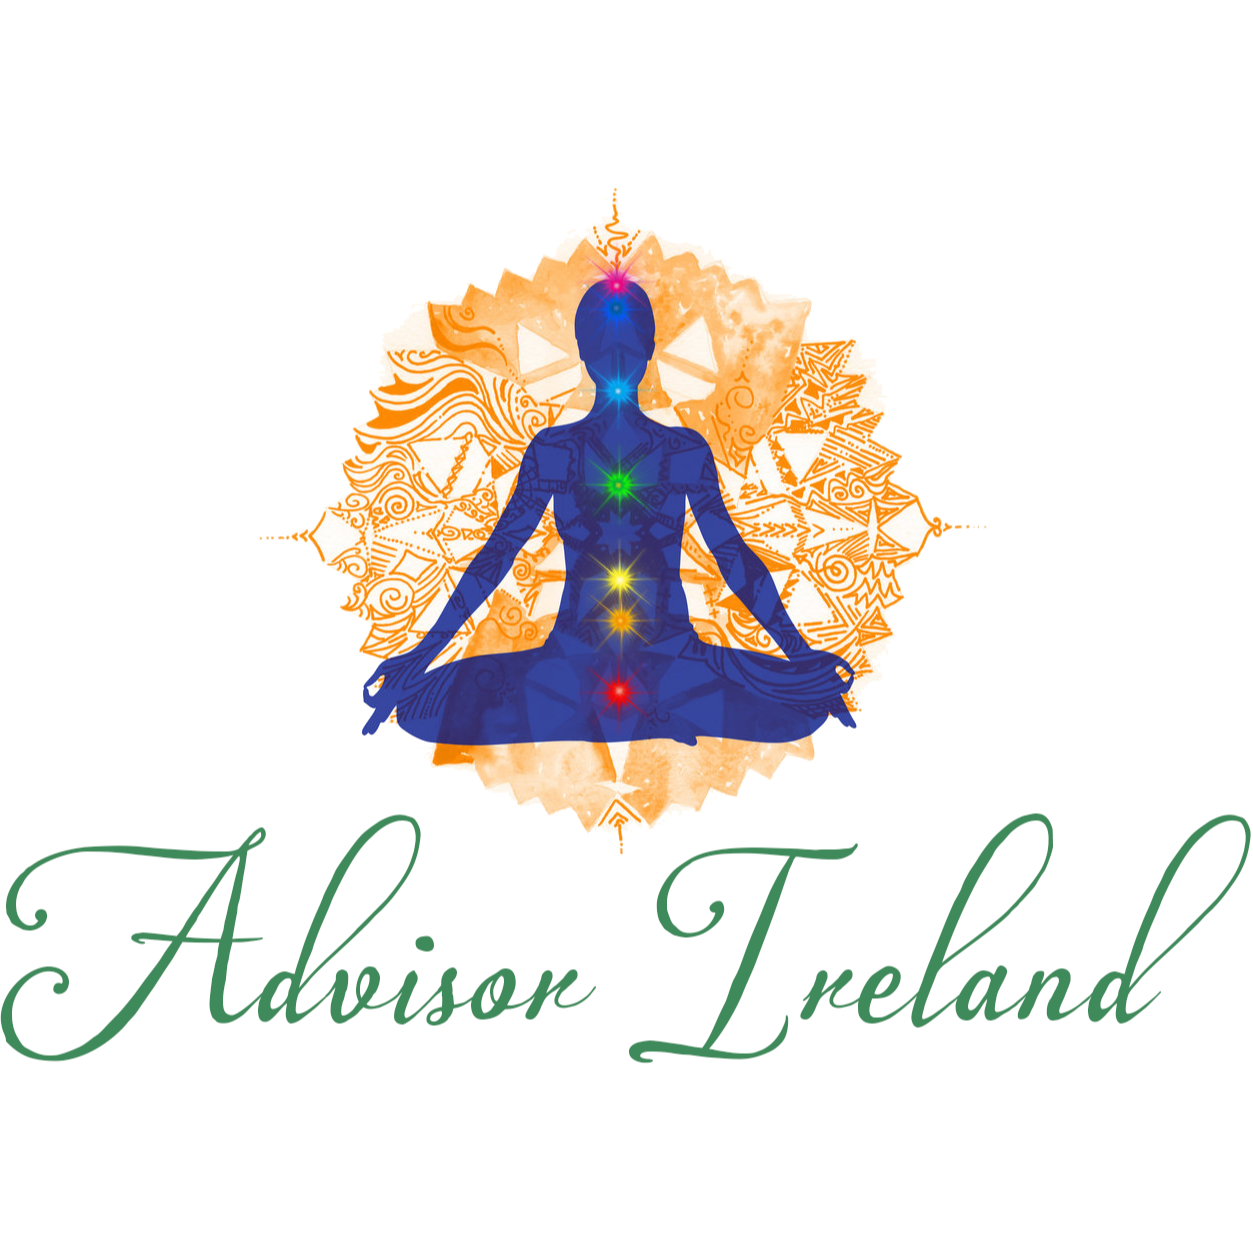 Ireland Greene Spiritual Advisor Orlando (407)721-2315